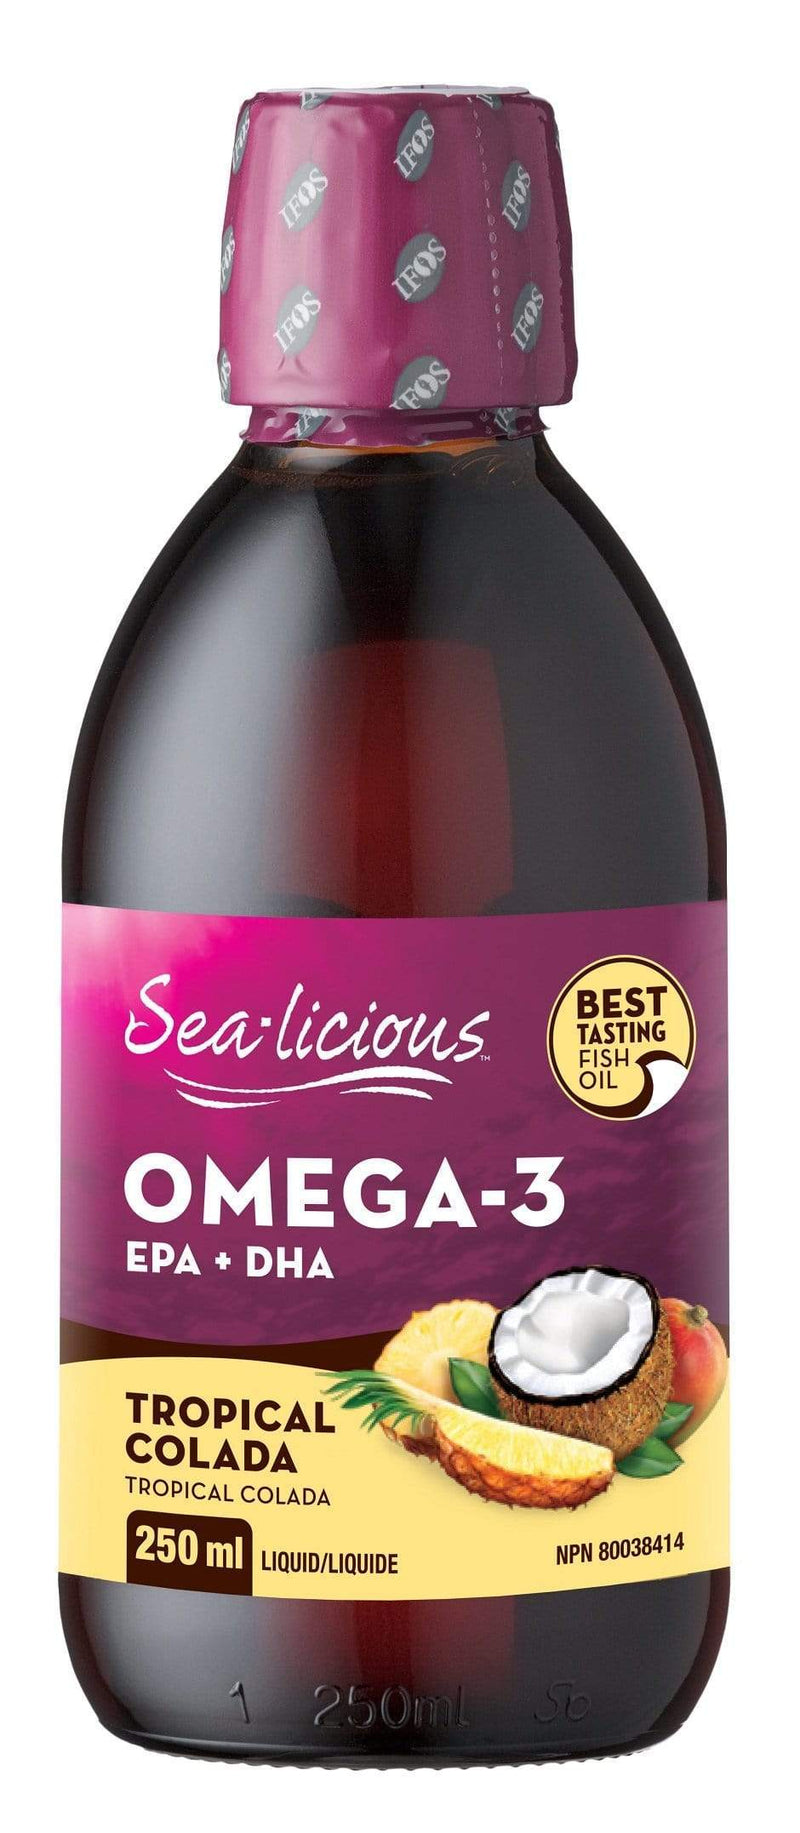 Karlene's Sea-licious Omega-3 with EPA + DHA - Tropical Colada